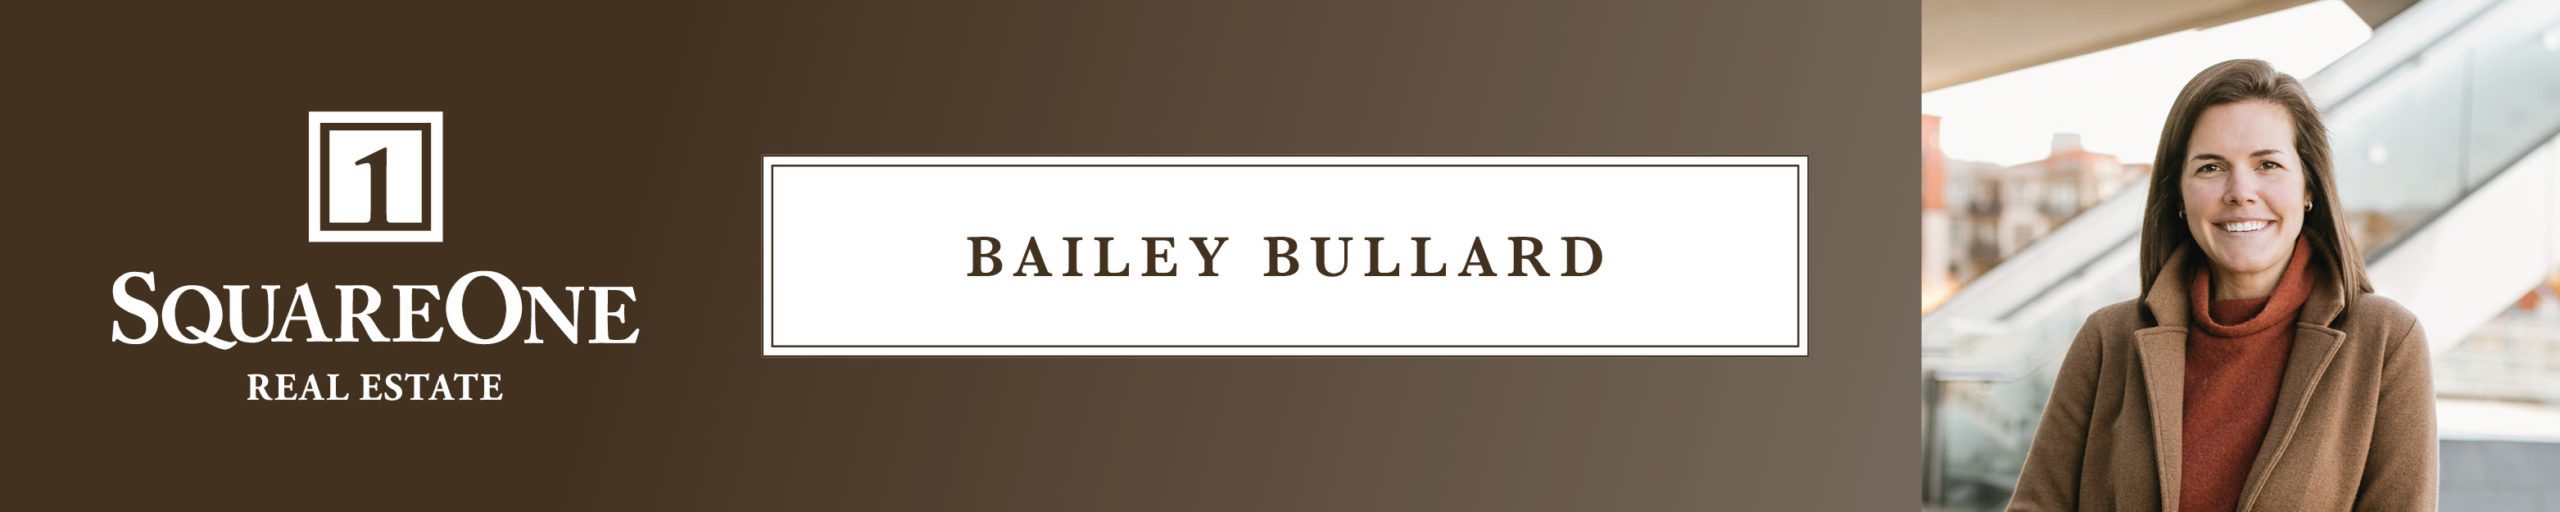 Bailey Bullard ad